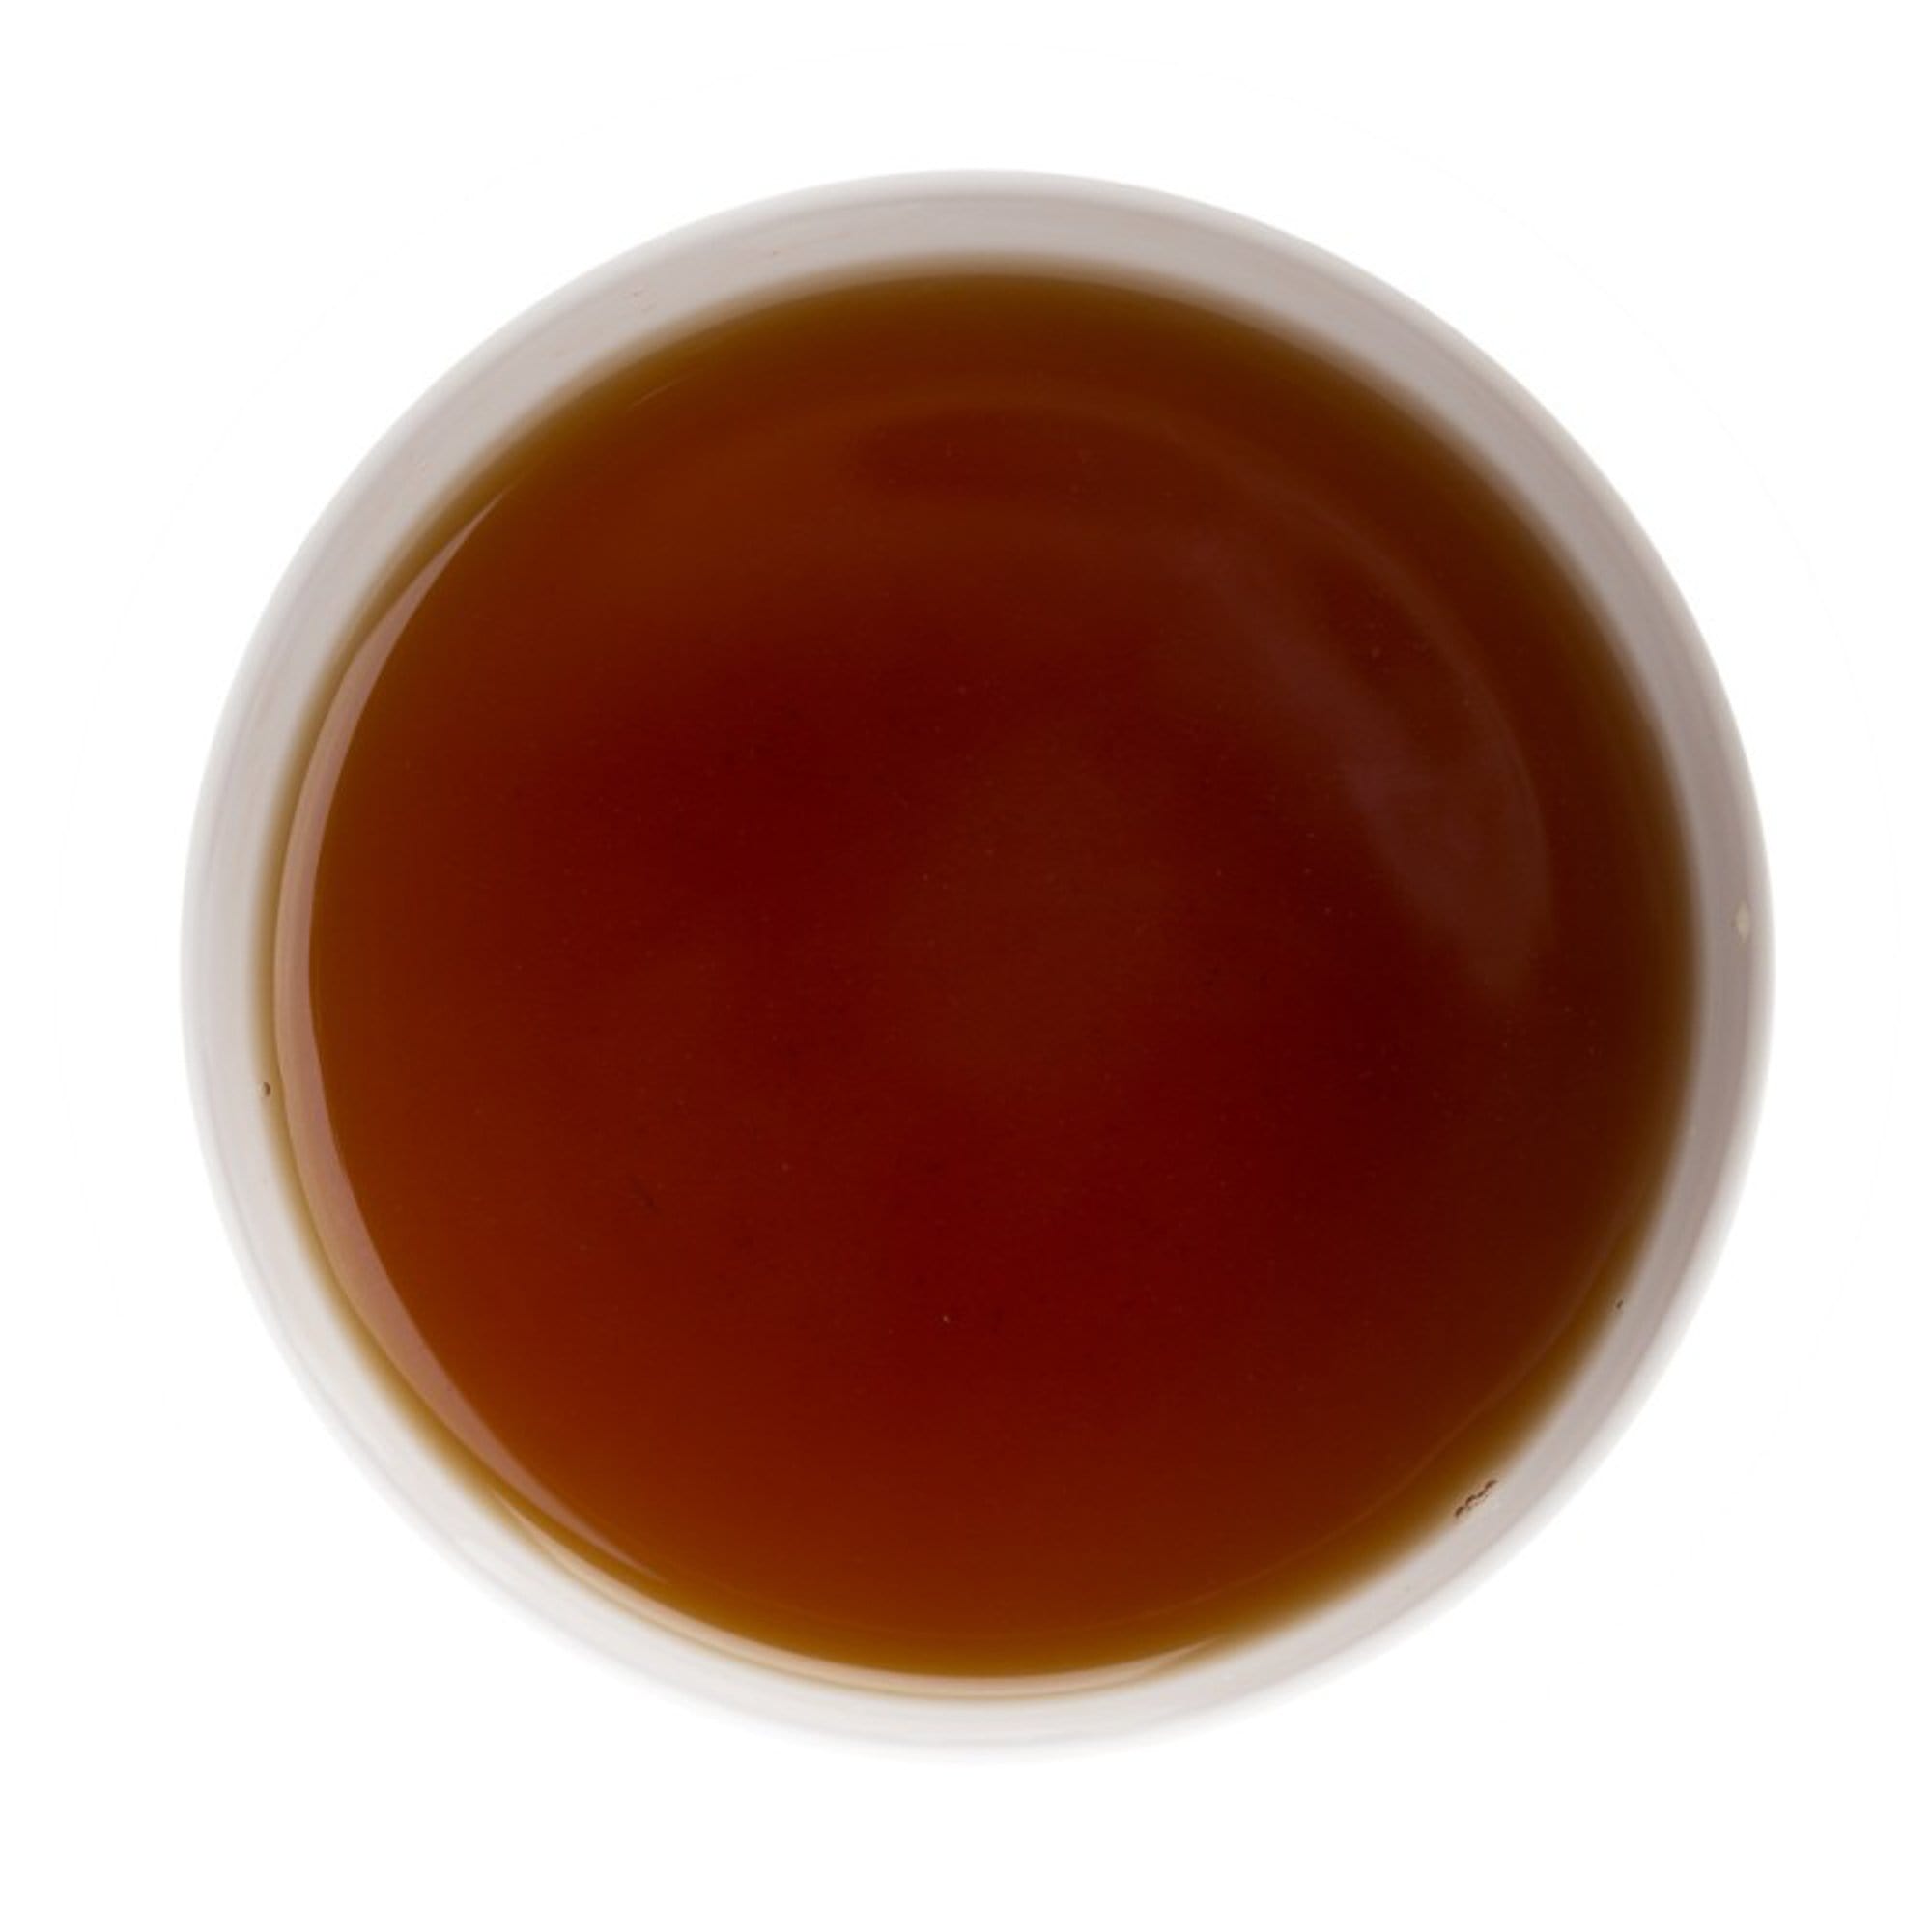 Dammann Biri arbata Biri arbata Home, juoda aromatinė, The Gout Russe Douchka-1, 100 g